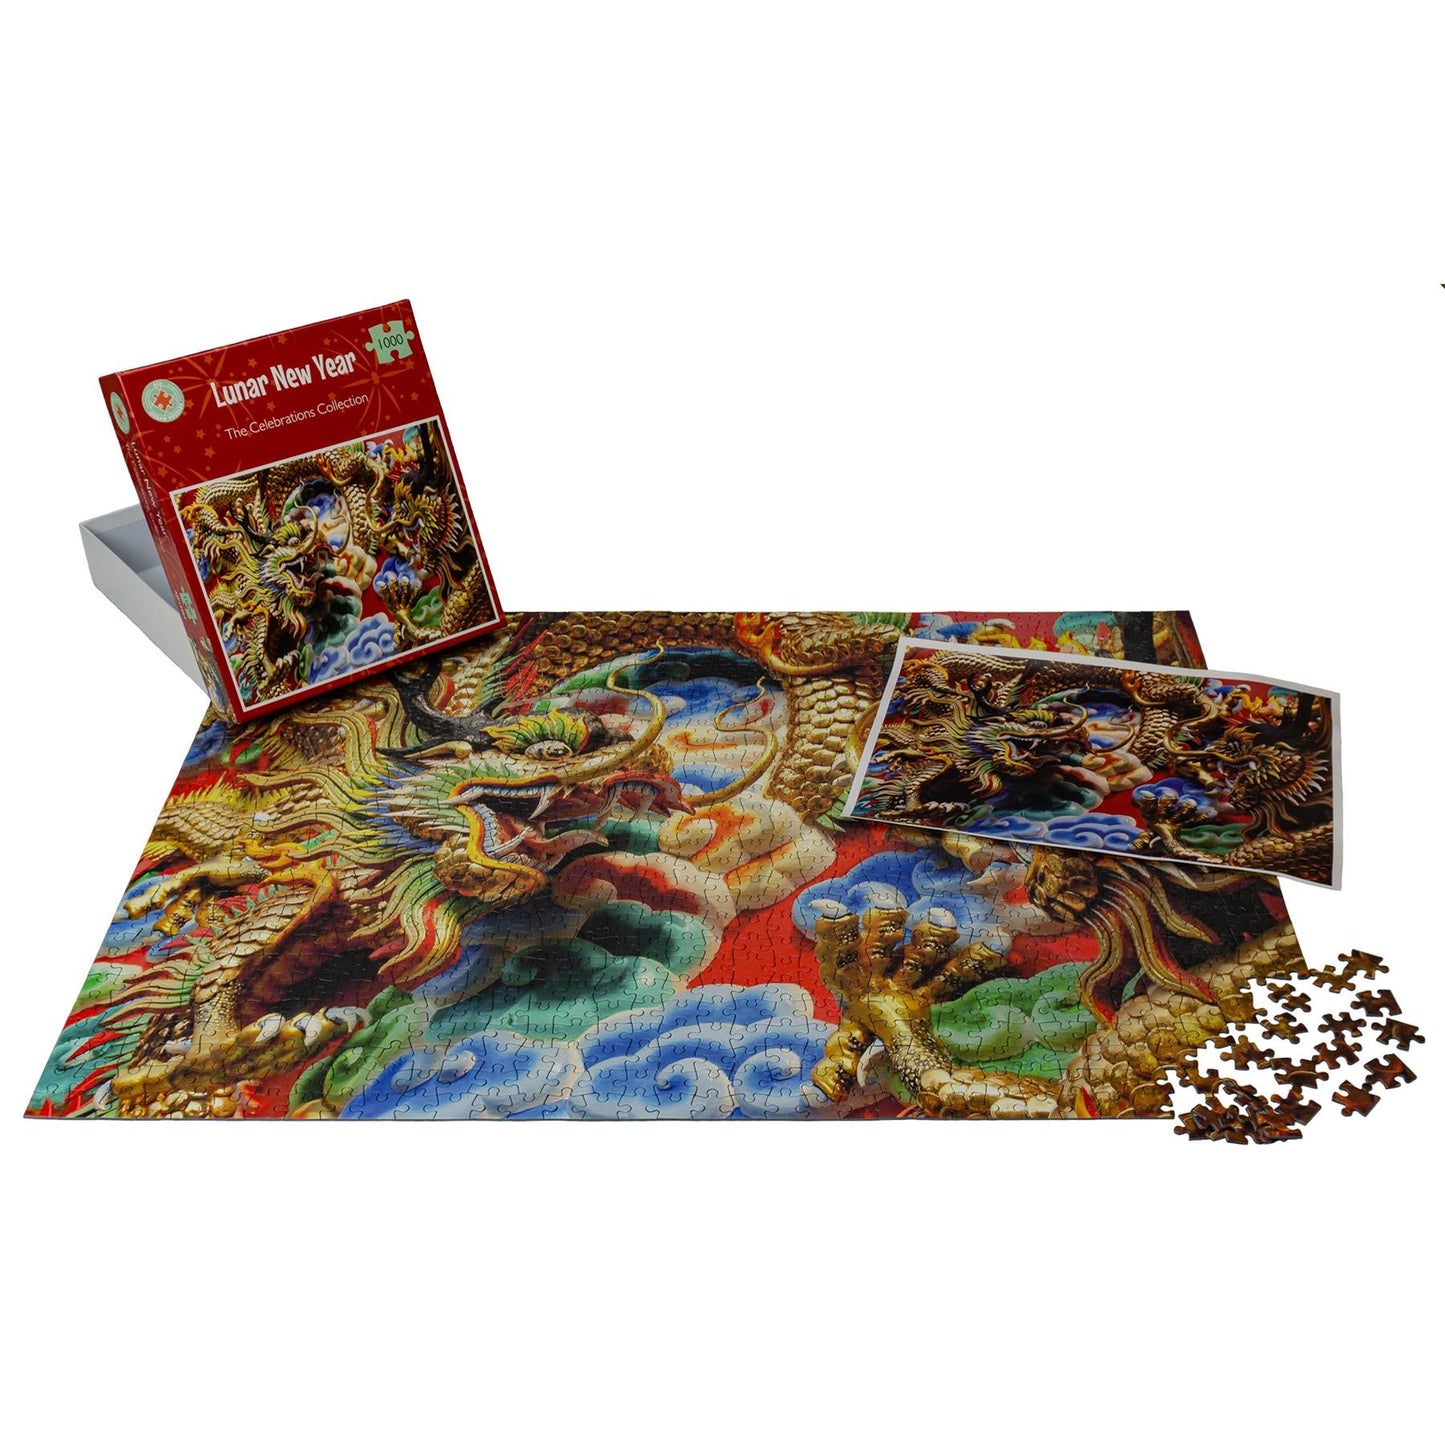 Lunar New Year 1000 Piece Jigsaw Puzzle